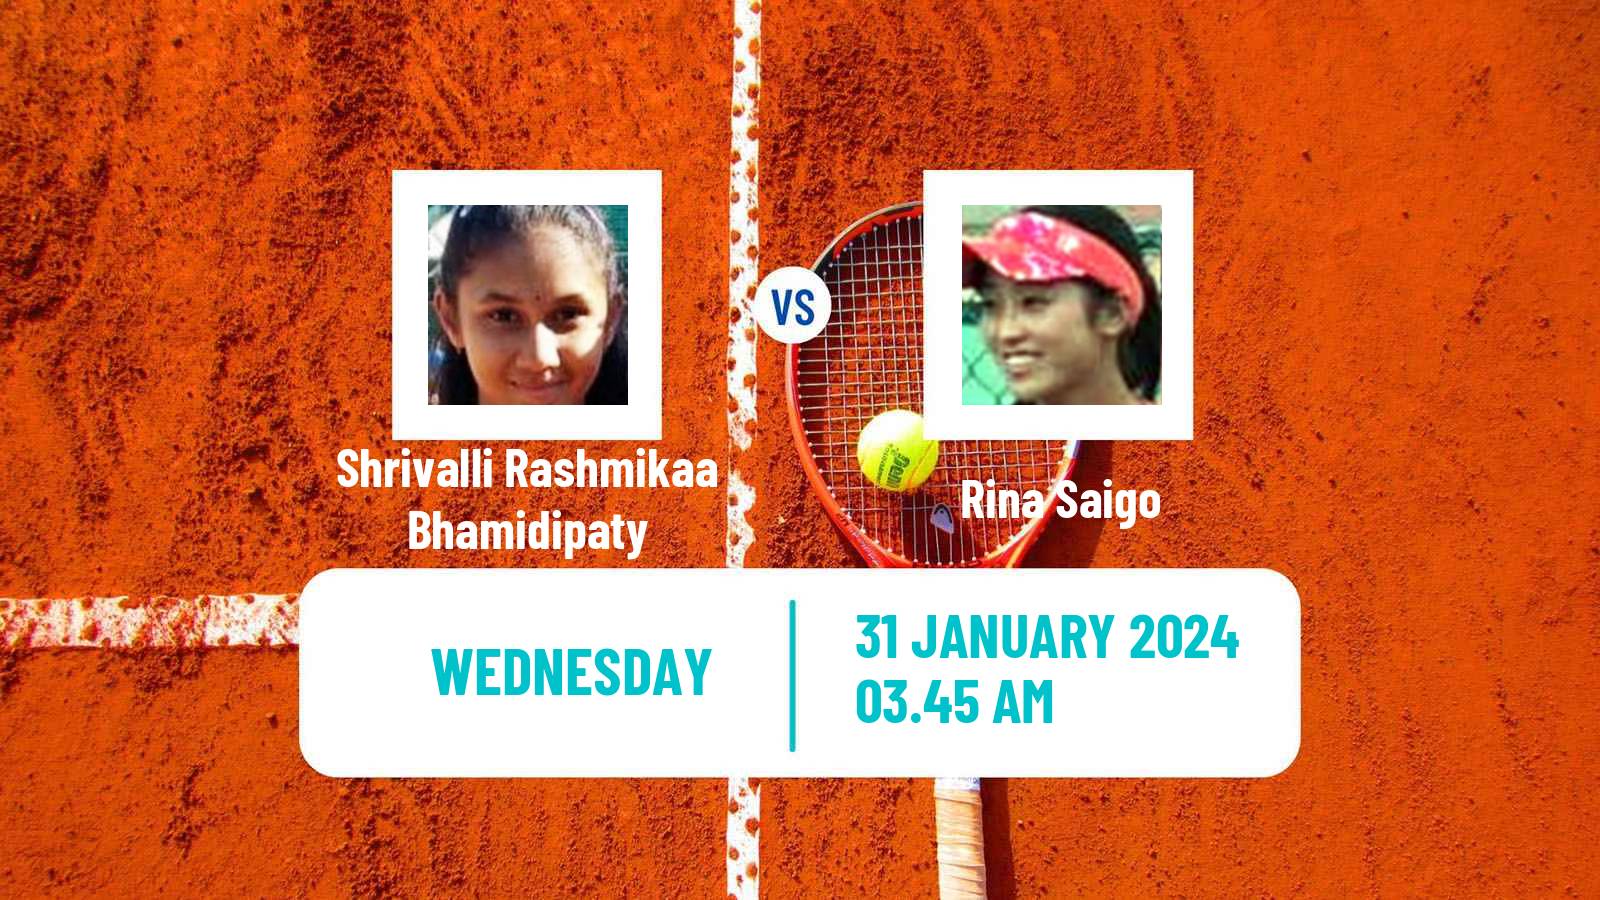 Tennis ITF W50 Indore Women Shrivalli Rashmikaa Bhamidipaty - Rina Saigo